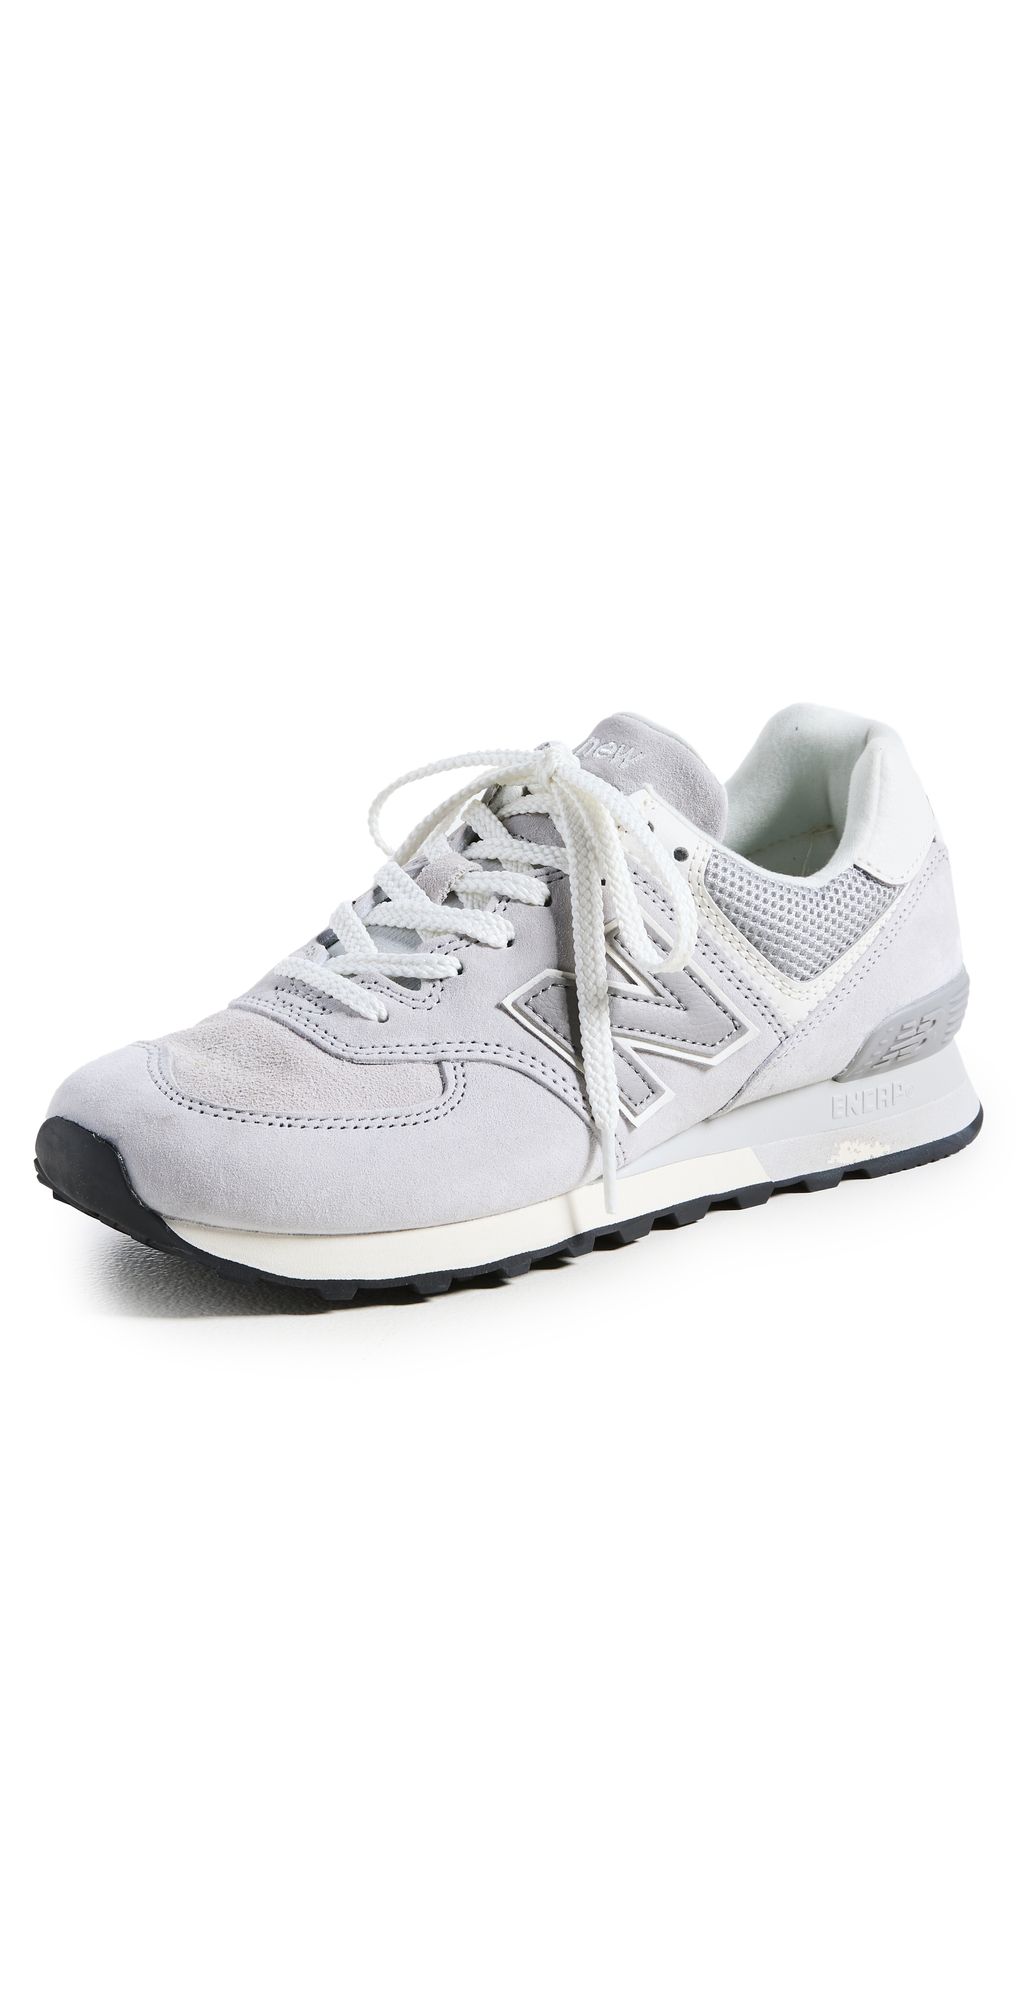 New Balance 574 Sneakers | Shopbop